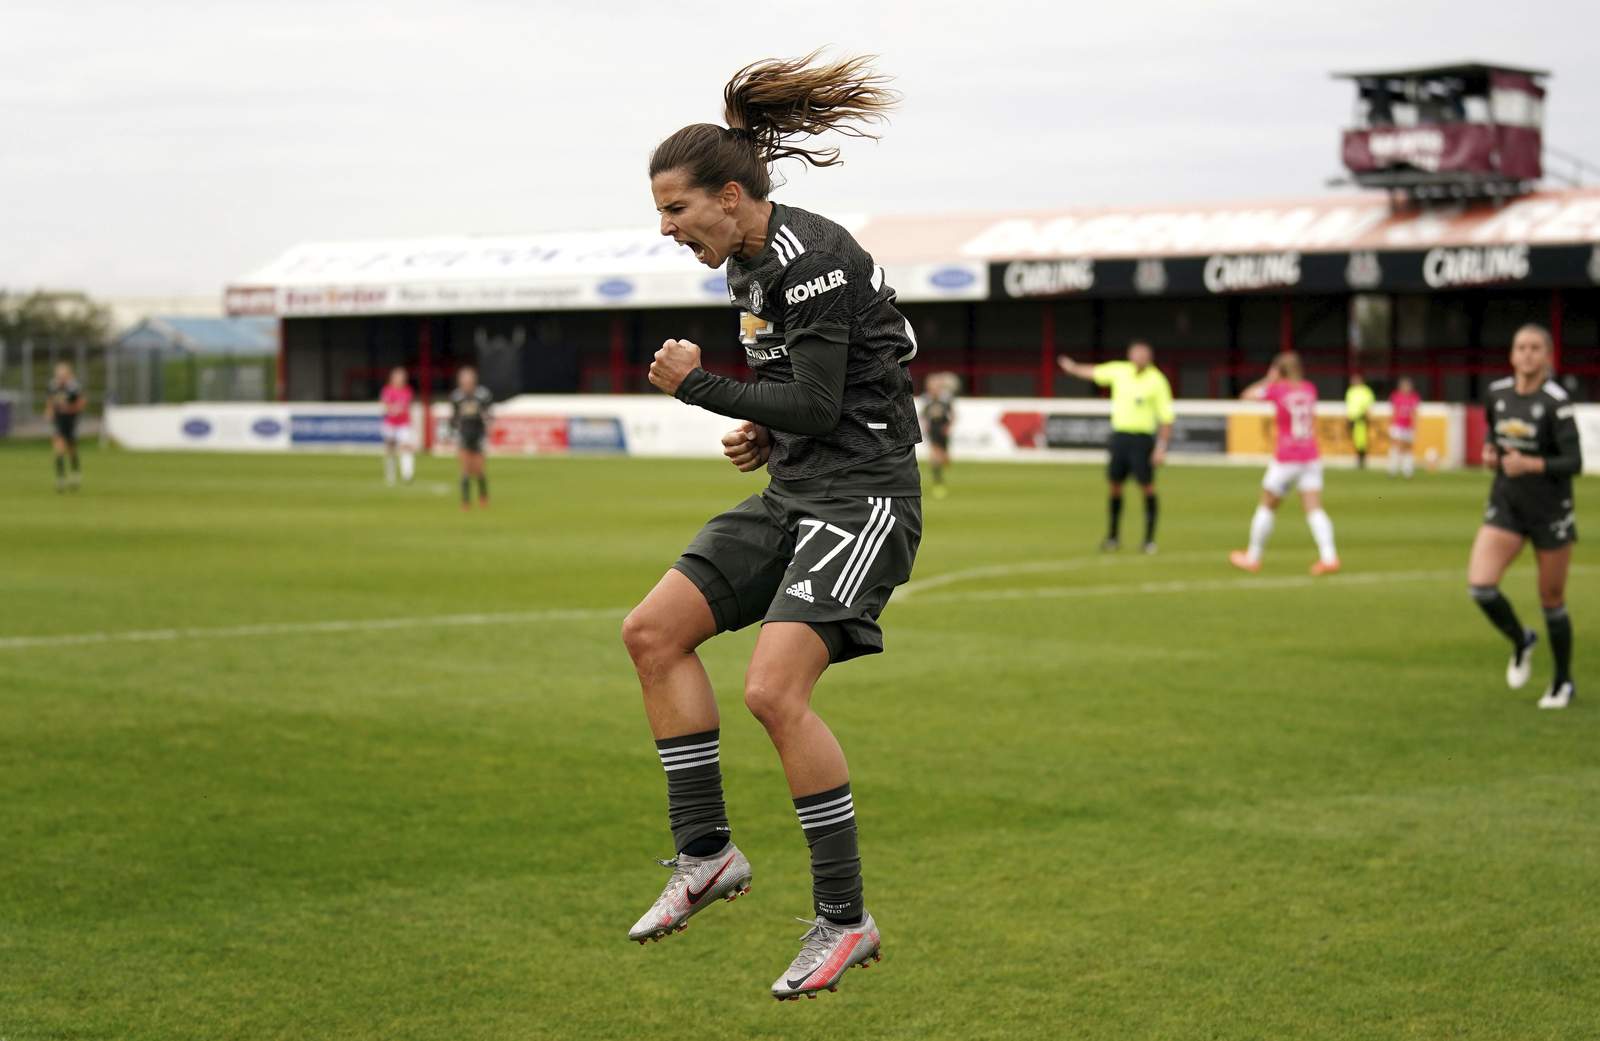 English women's soccer targets titles, player development